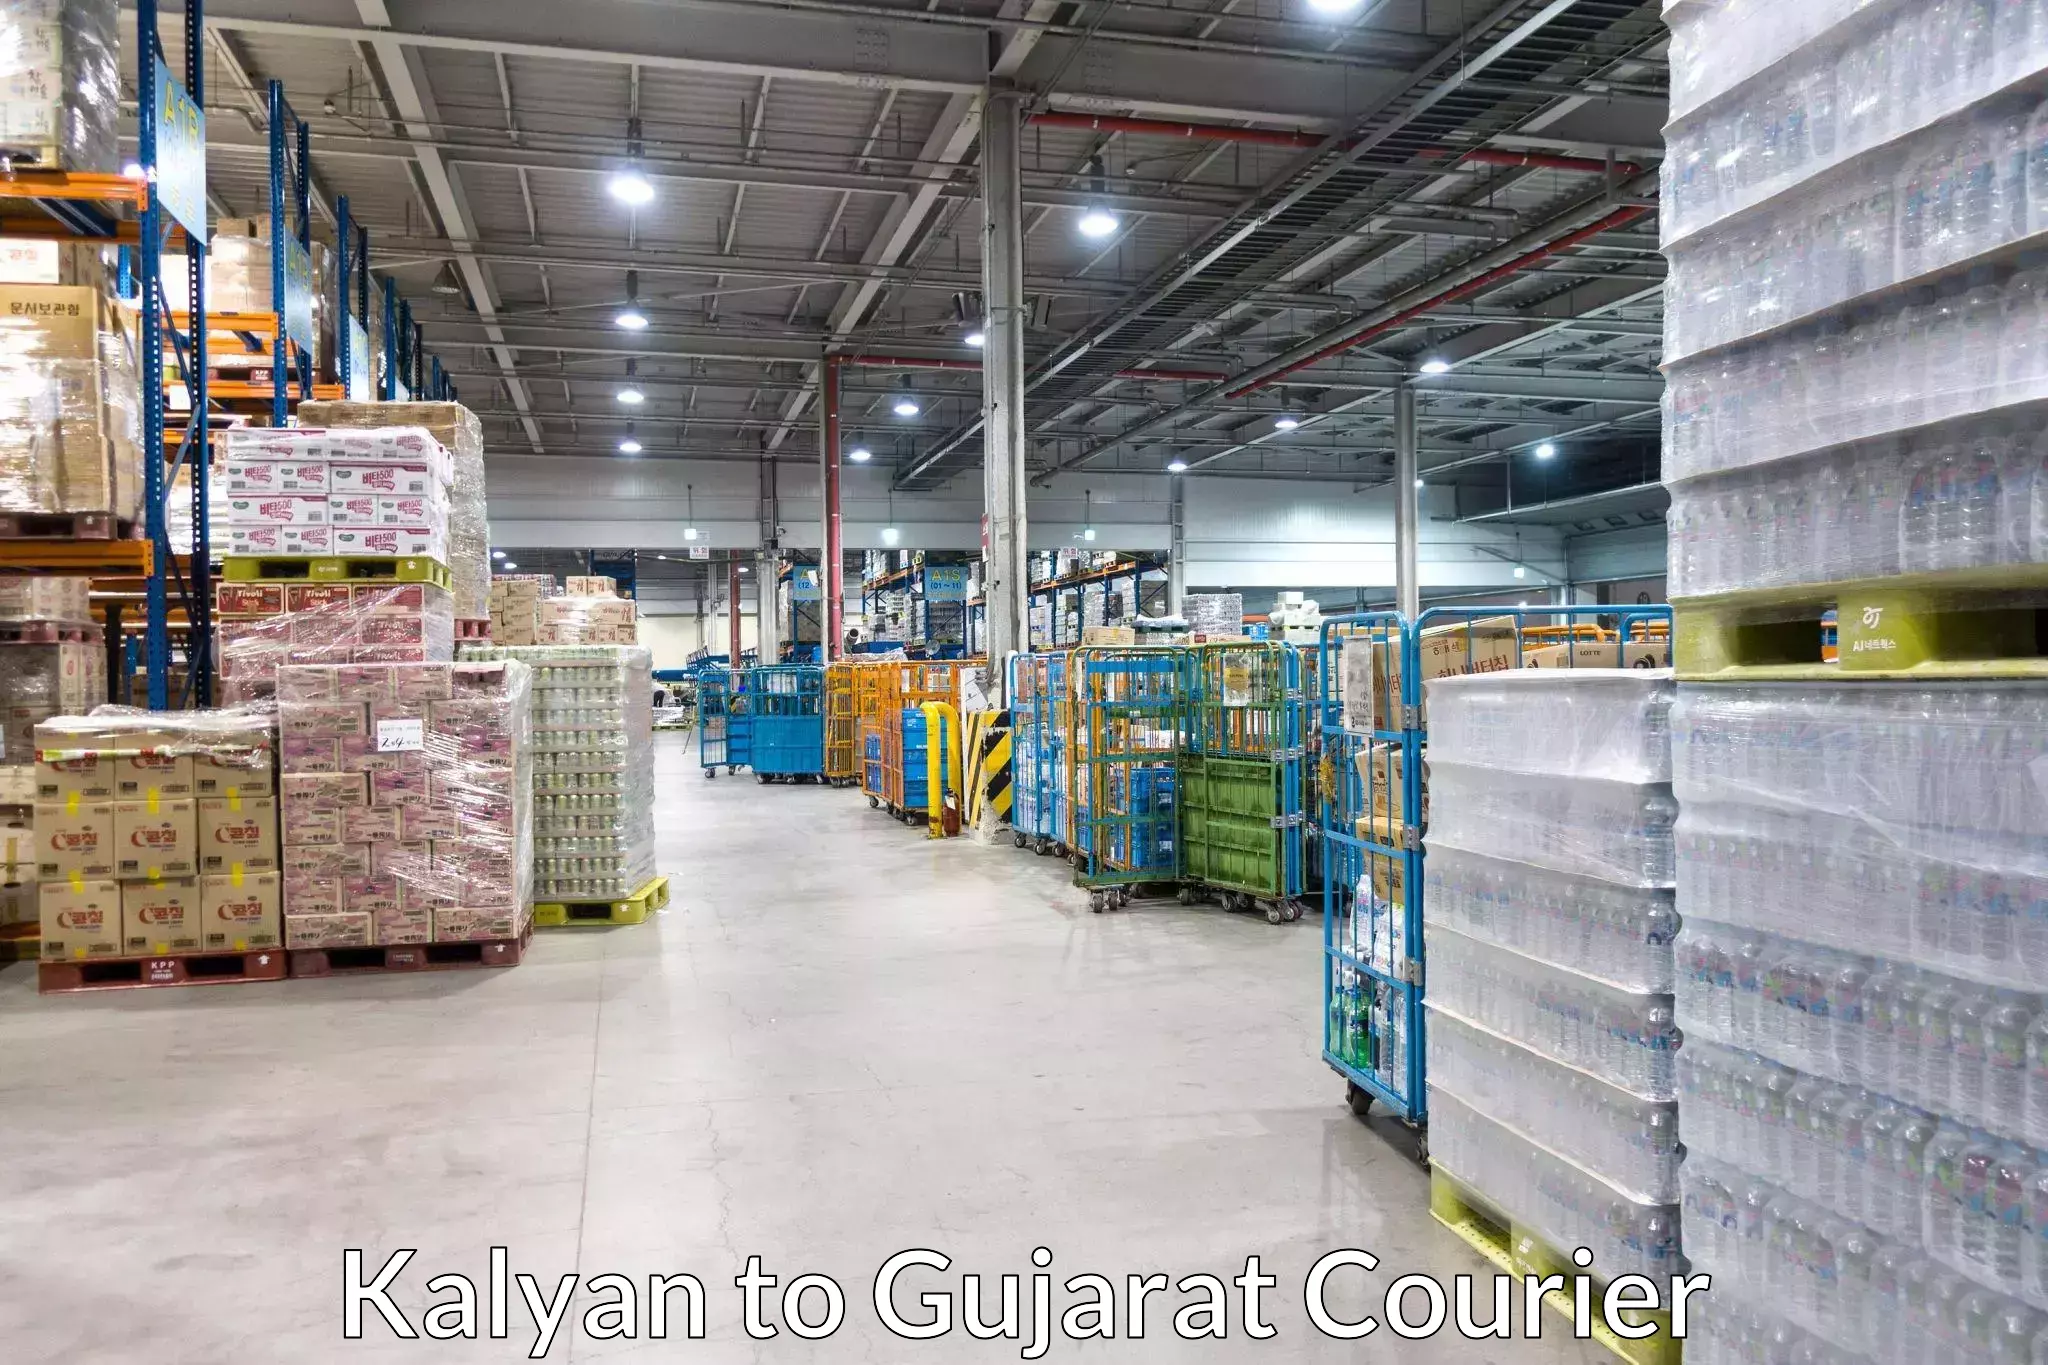 Comprehensive shipping network Kalyan to Veraval